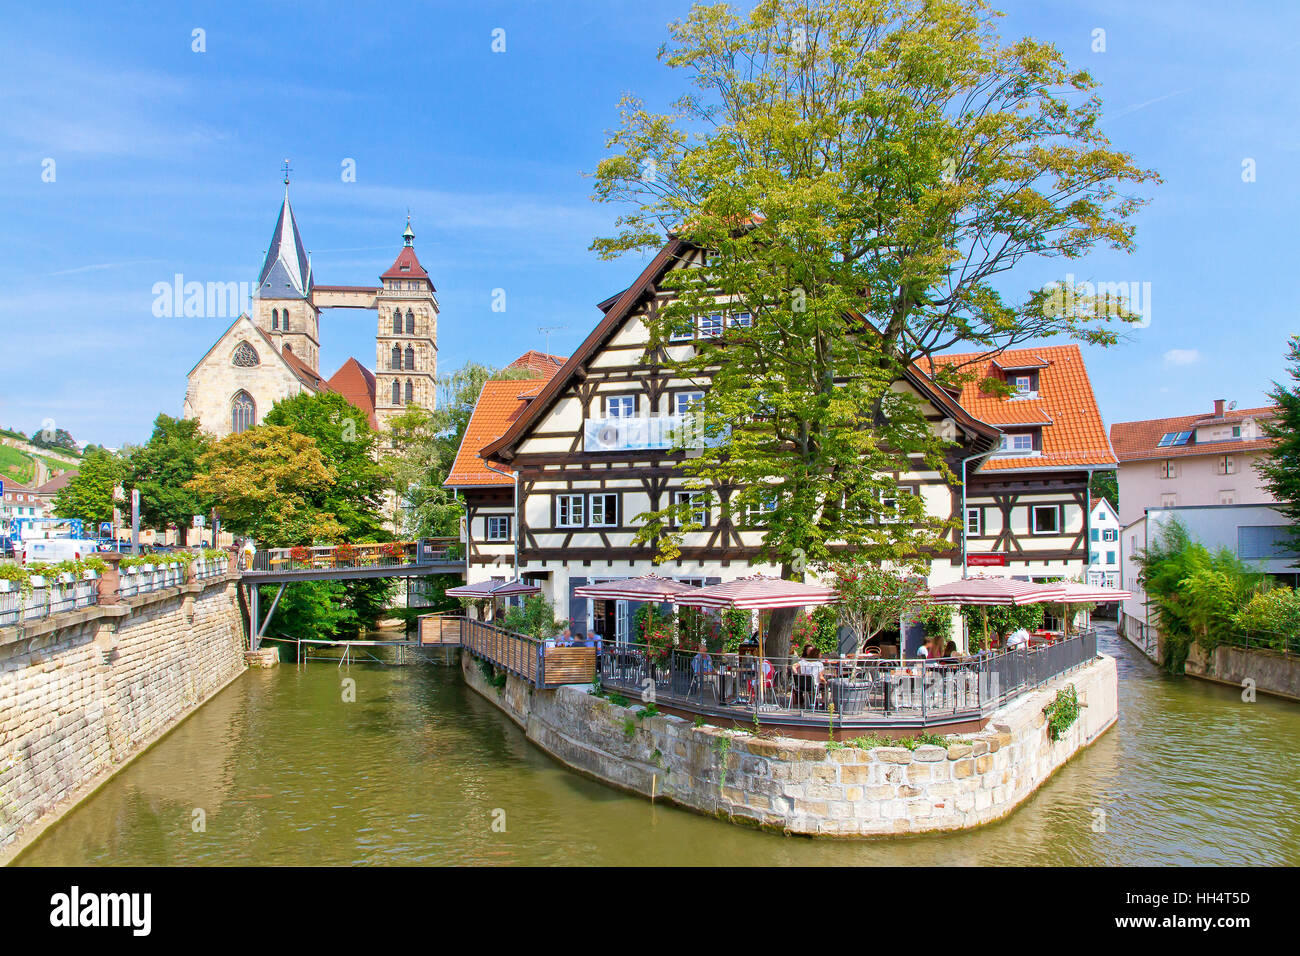 Romantic city of Esslingen am Neckar, Germany Stock Photo